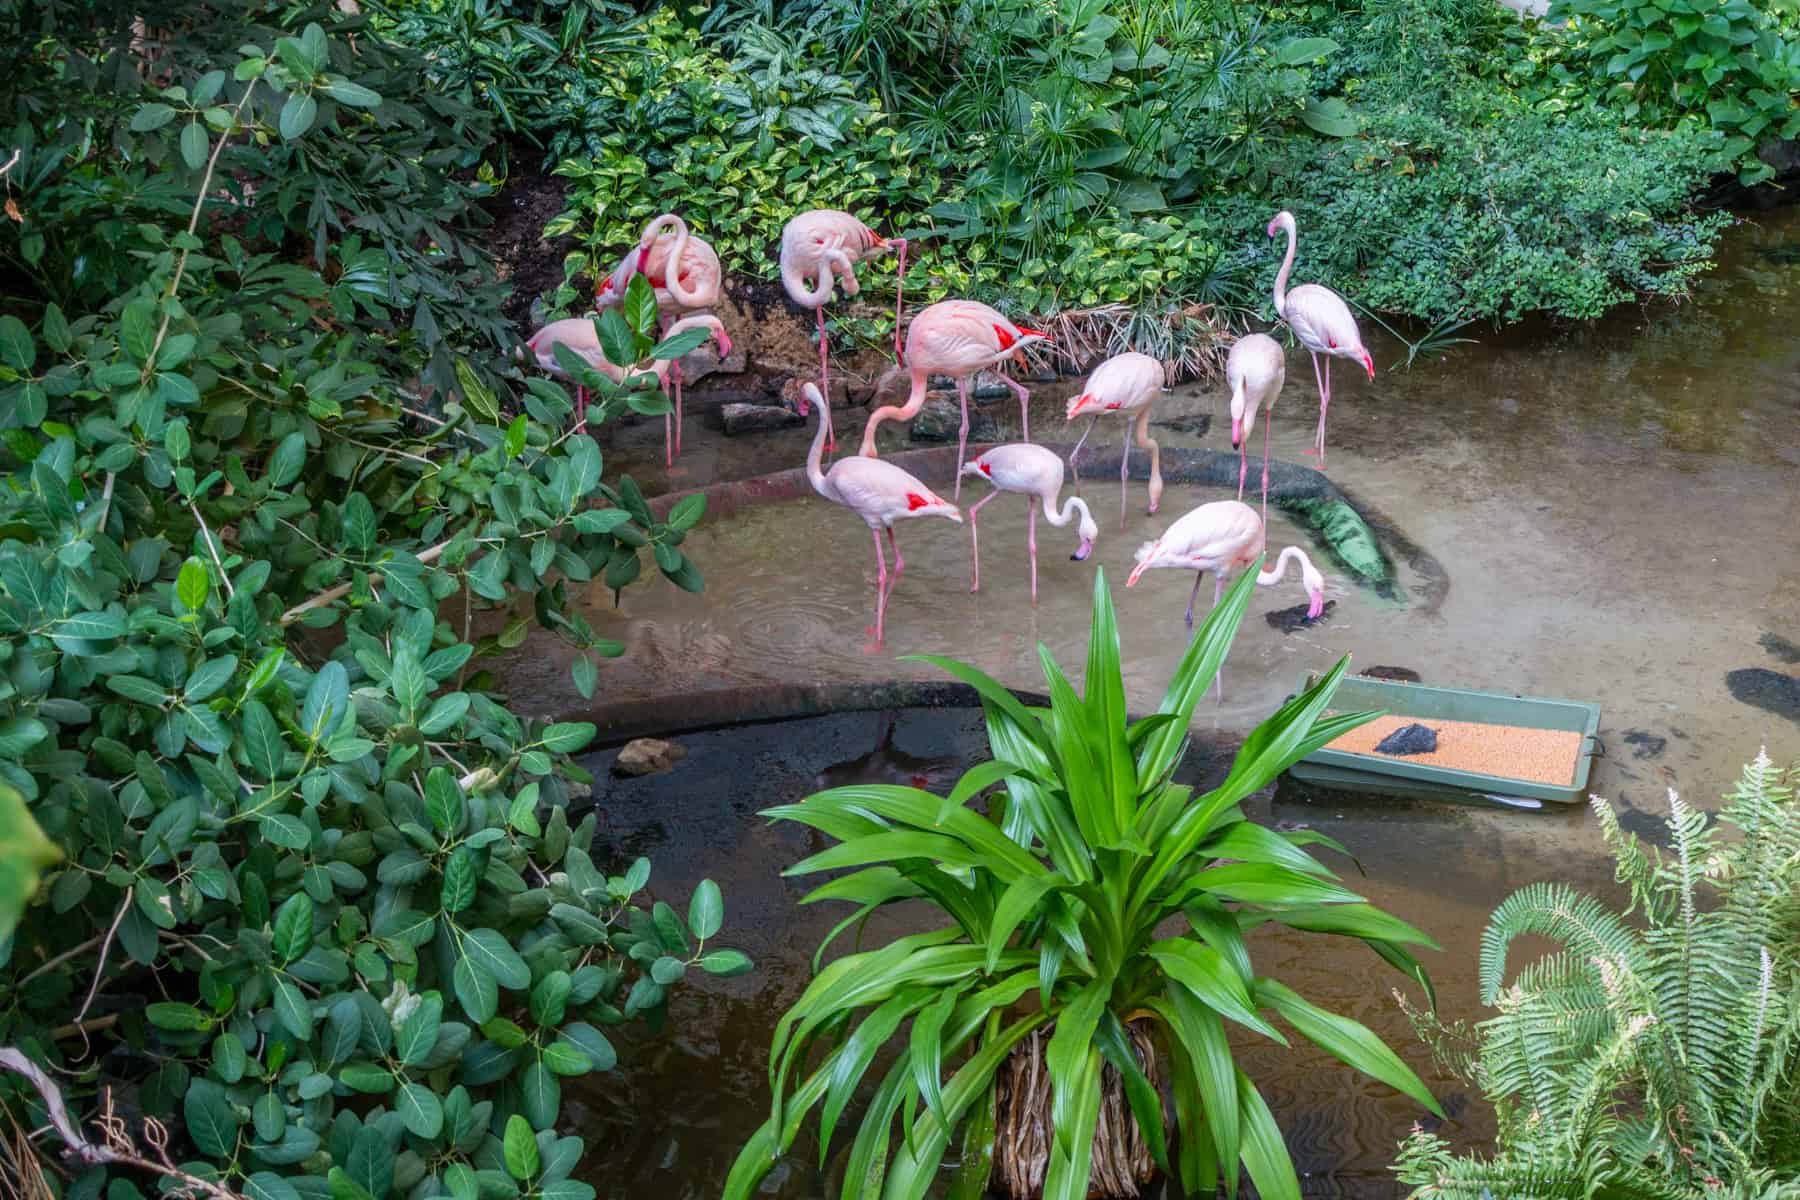 Flamingos Trpoical Island